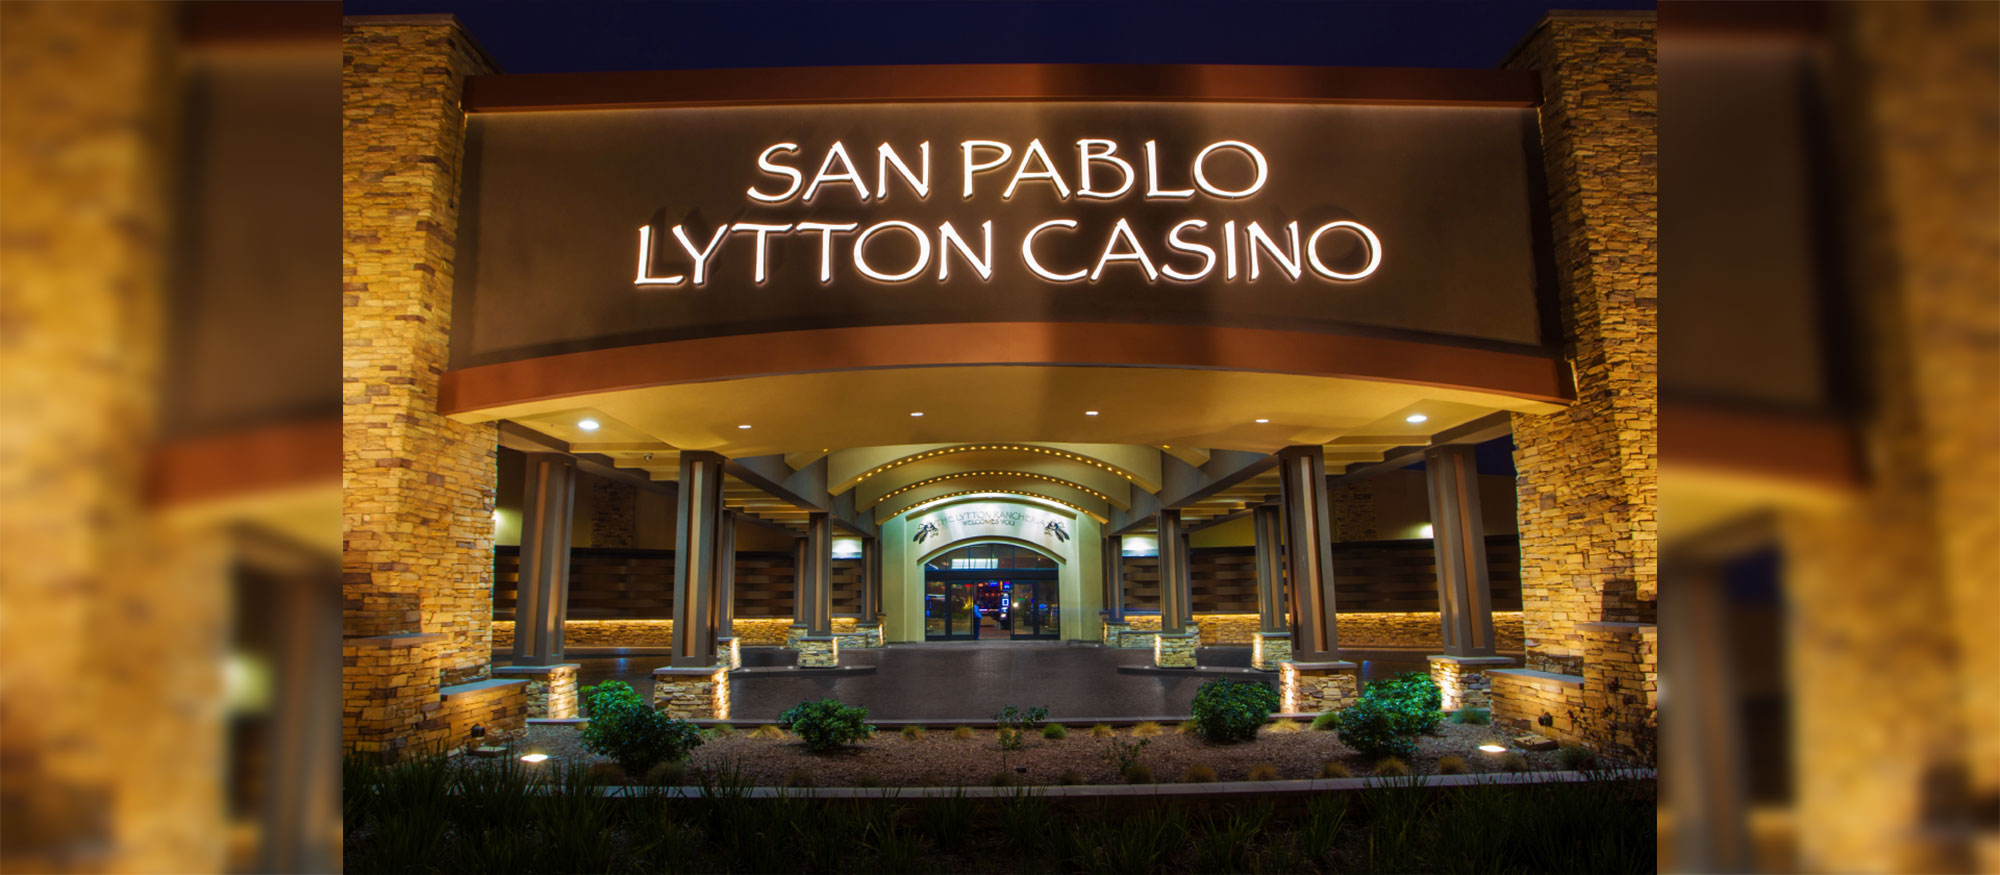 Have you heard of san pablo lytton casino?